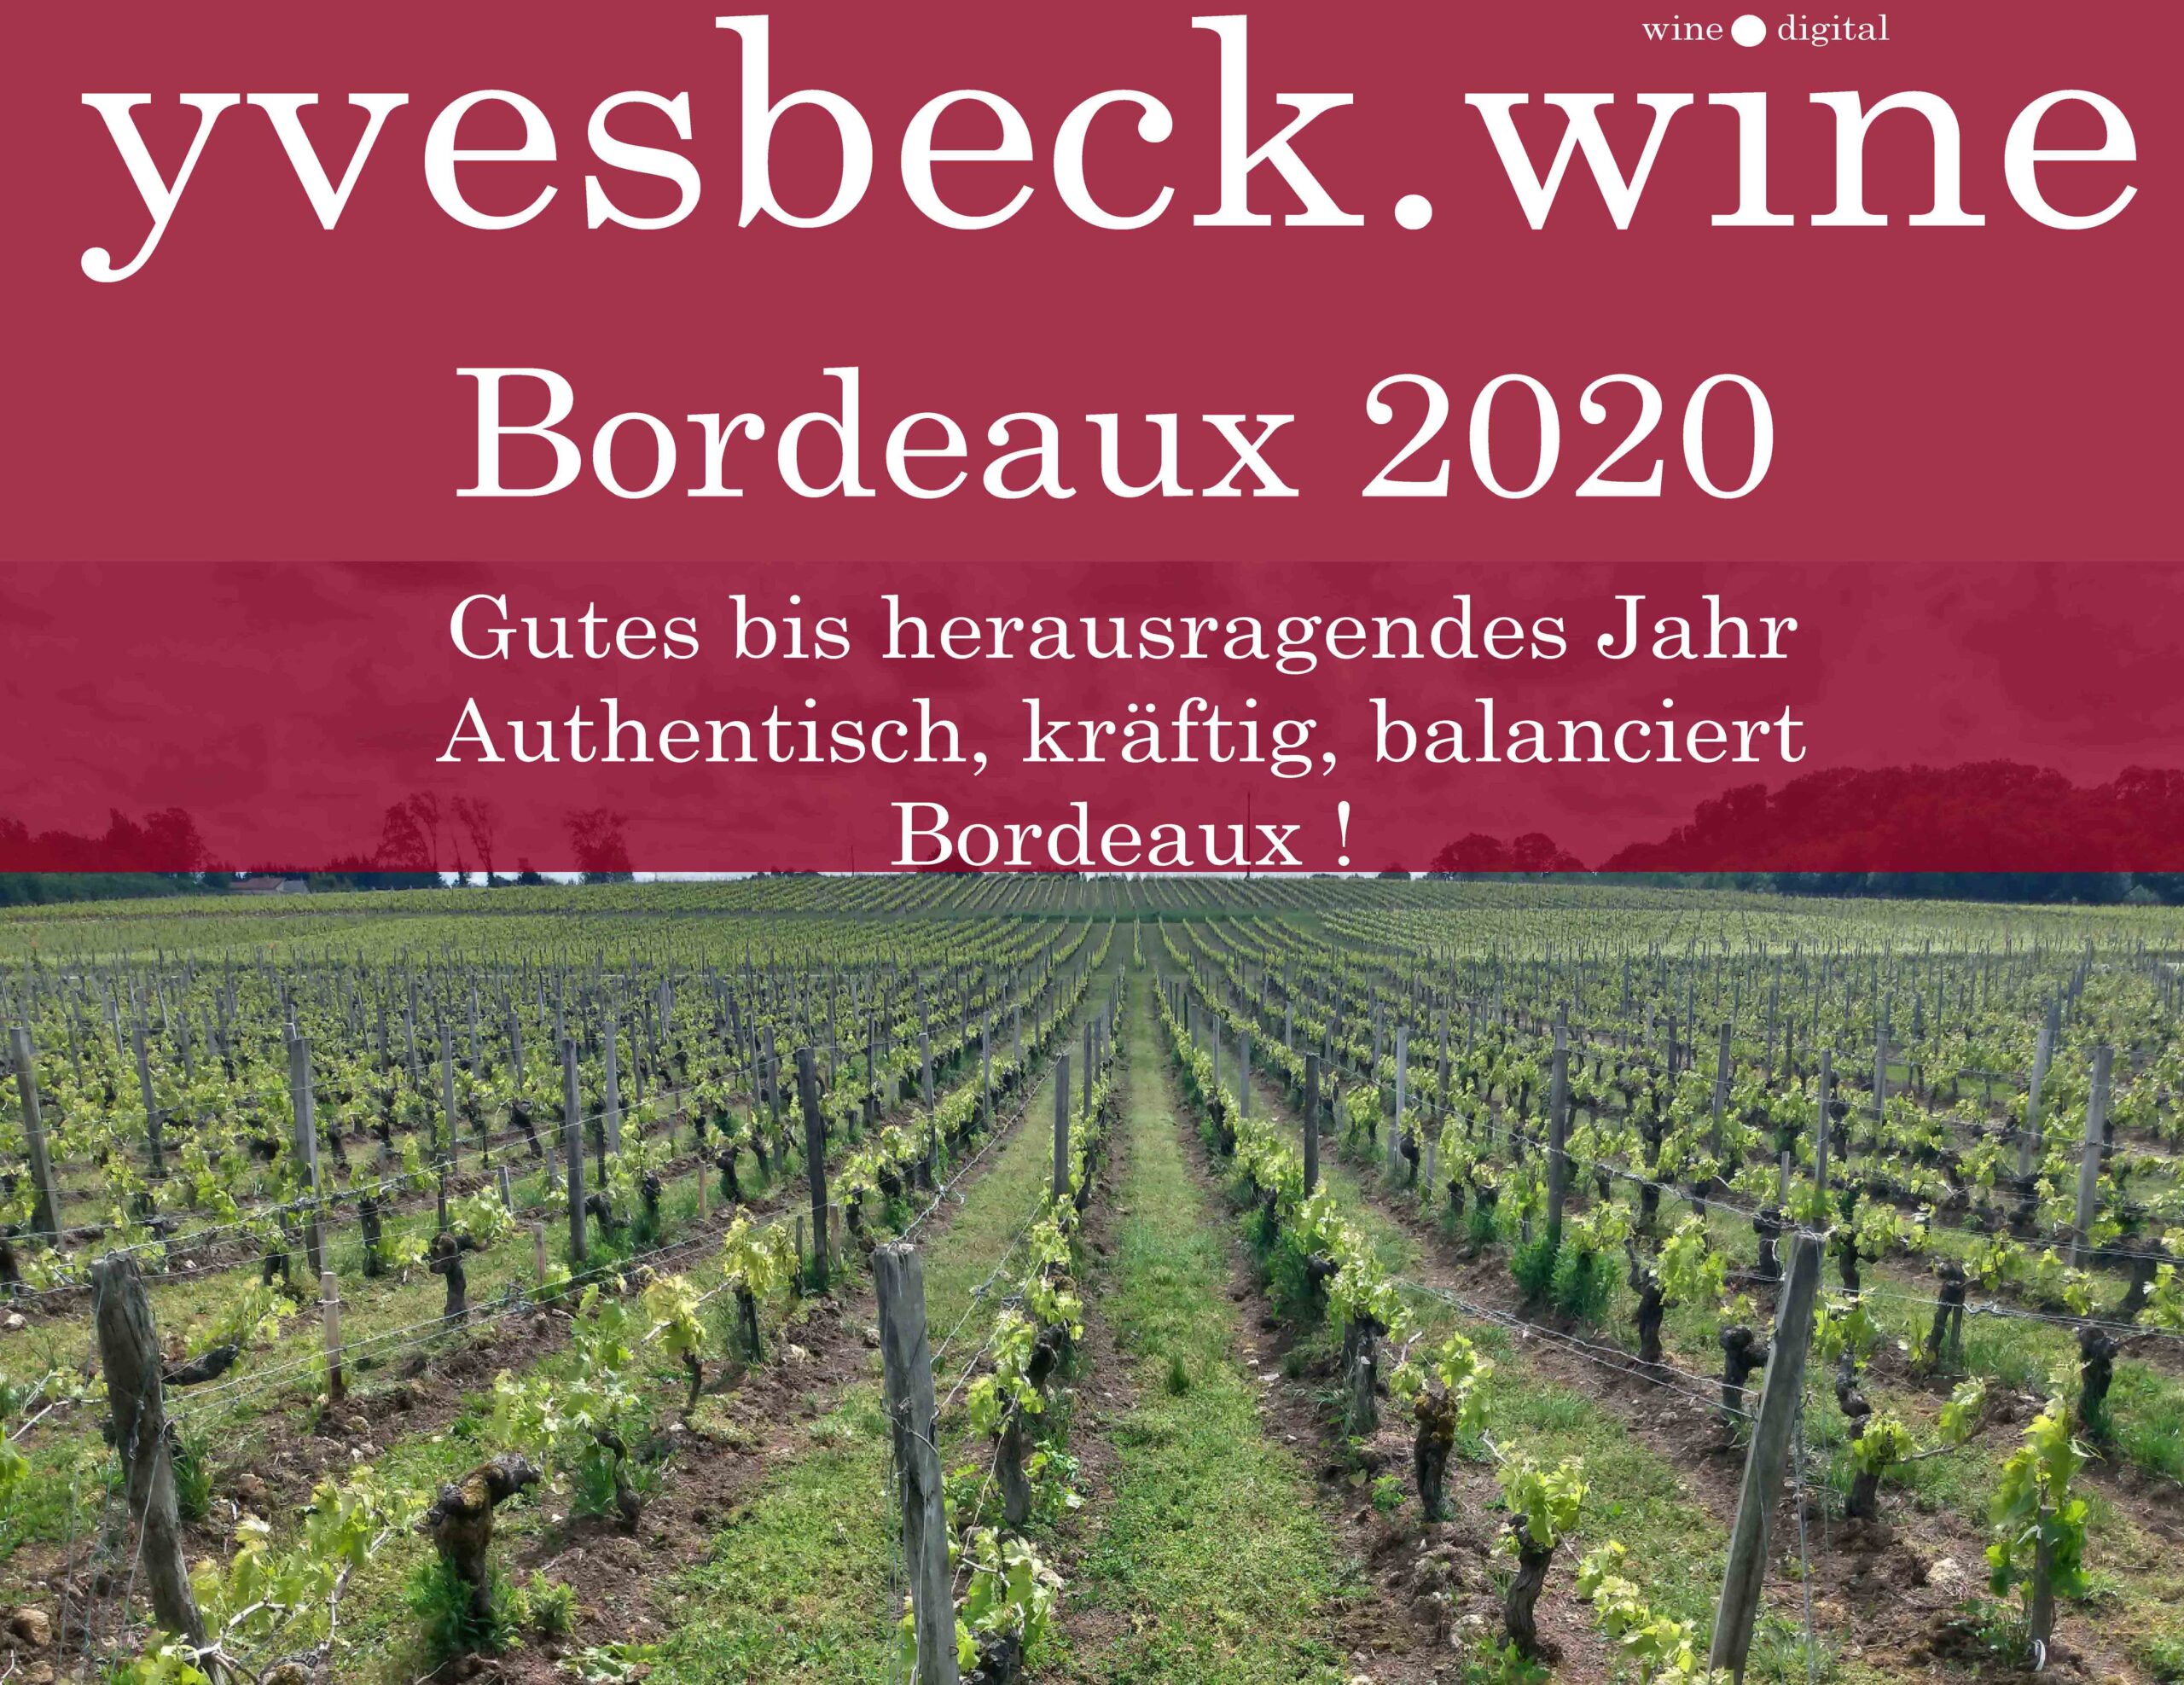 Primeurs Bordeaux 2020 - Yves Beck